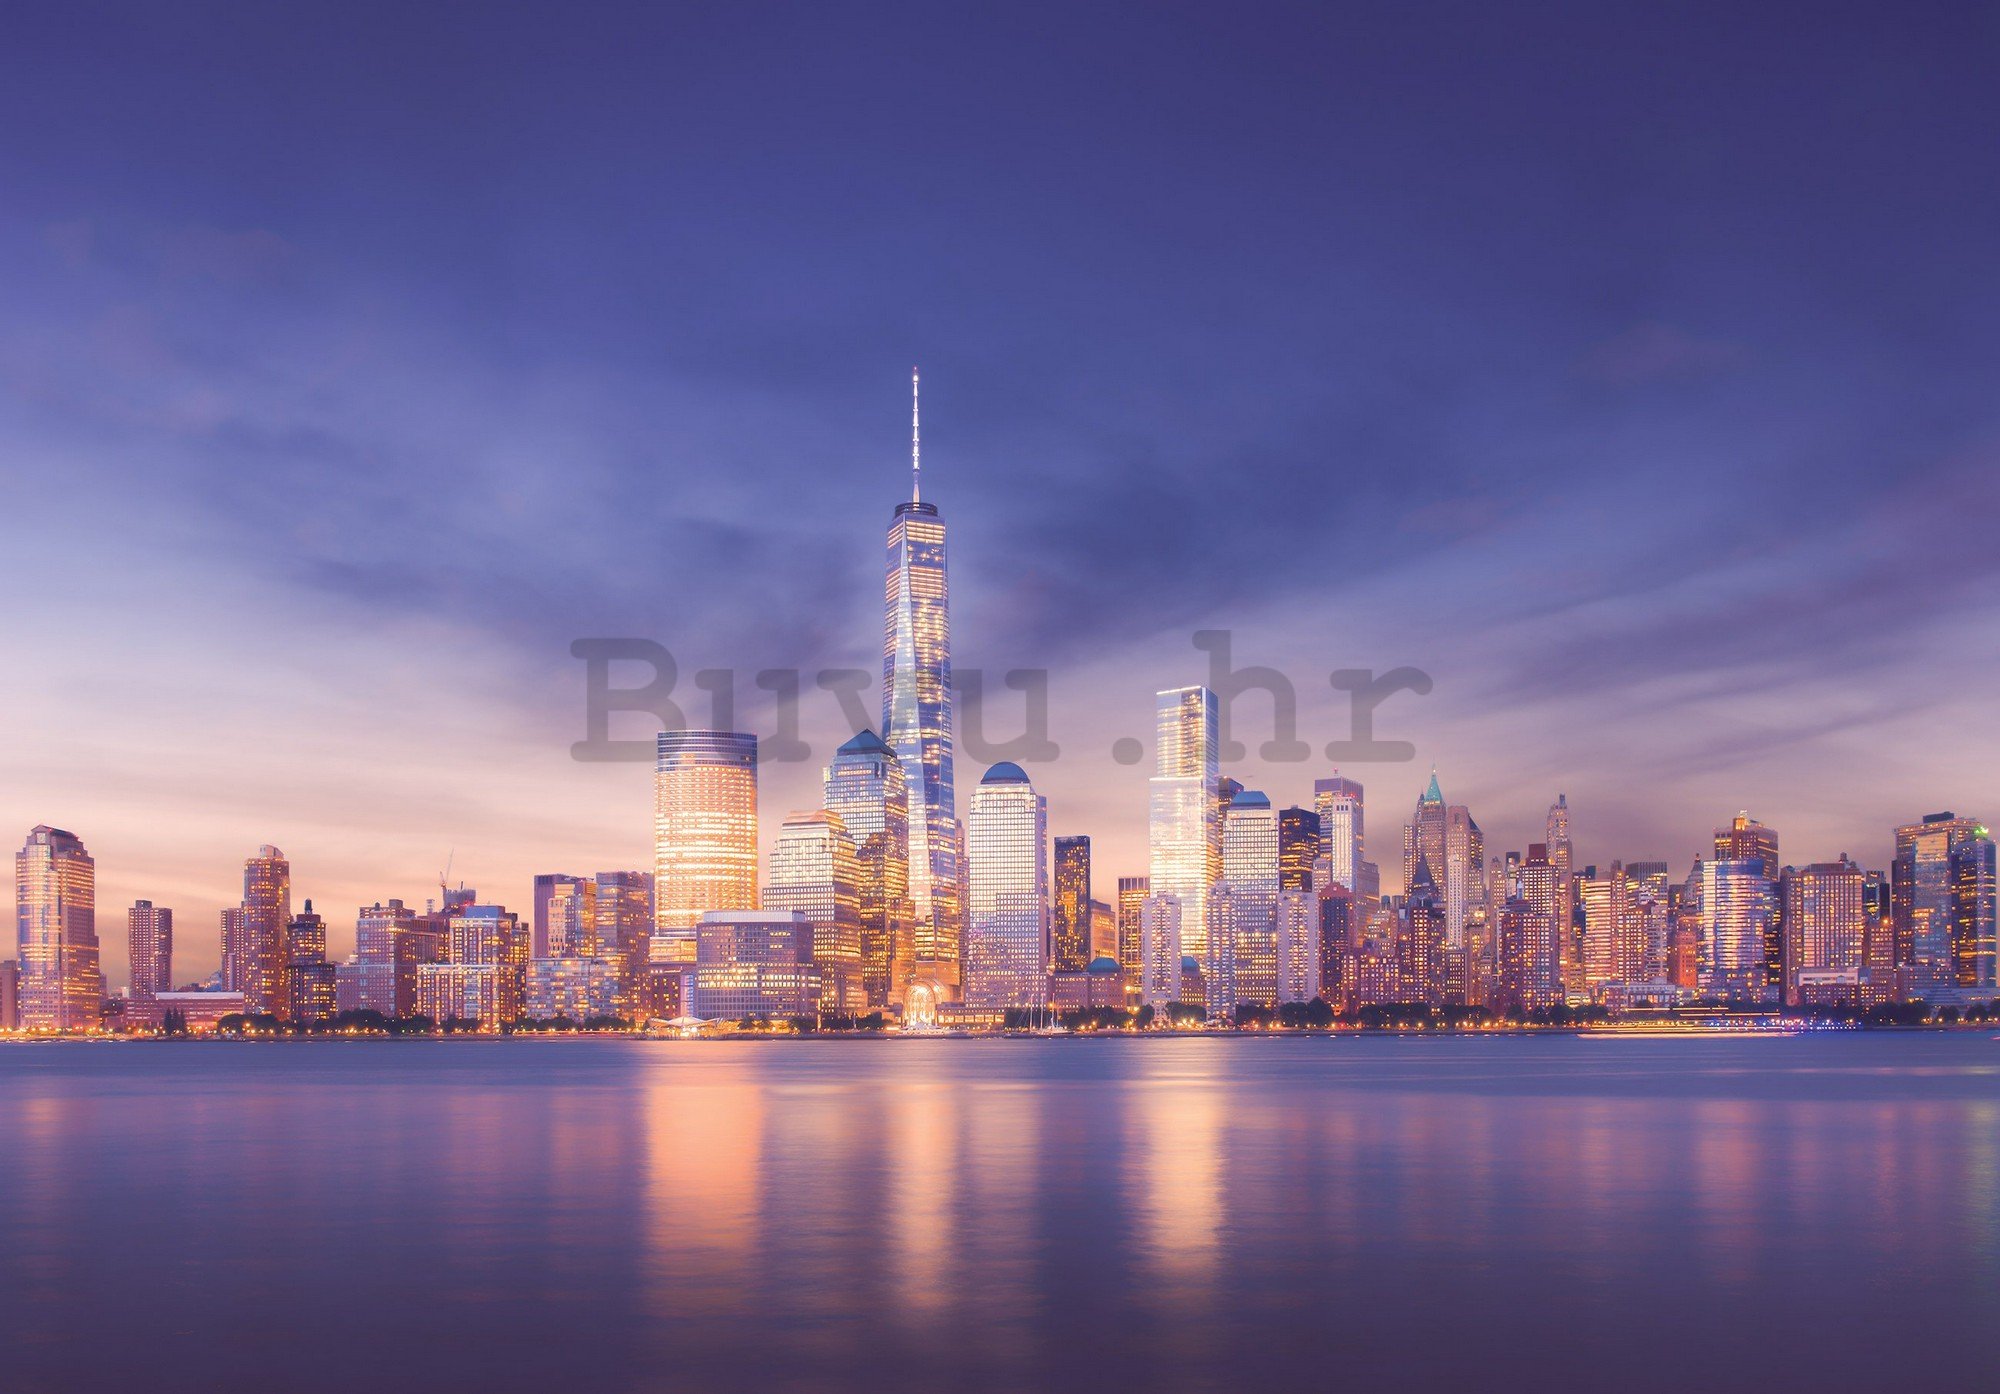 Foto tapeta: New York City (Manhattan nakon zalaska sunca) - 254x92 cm